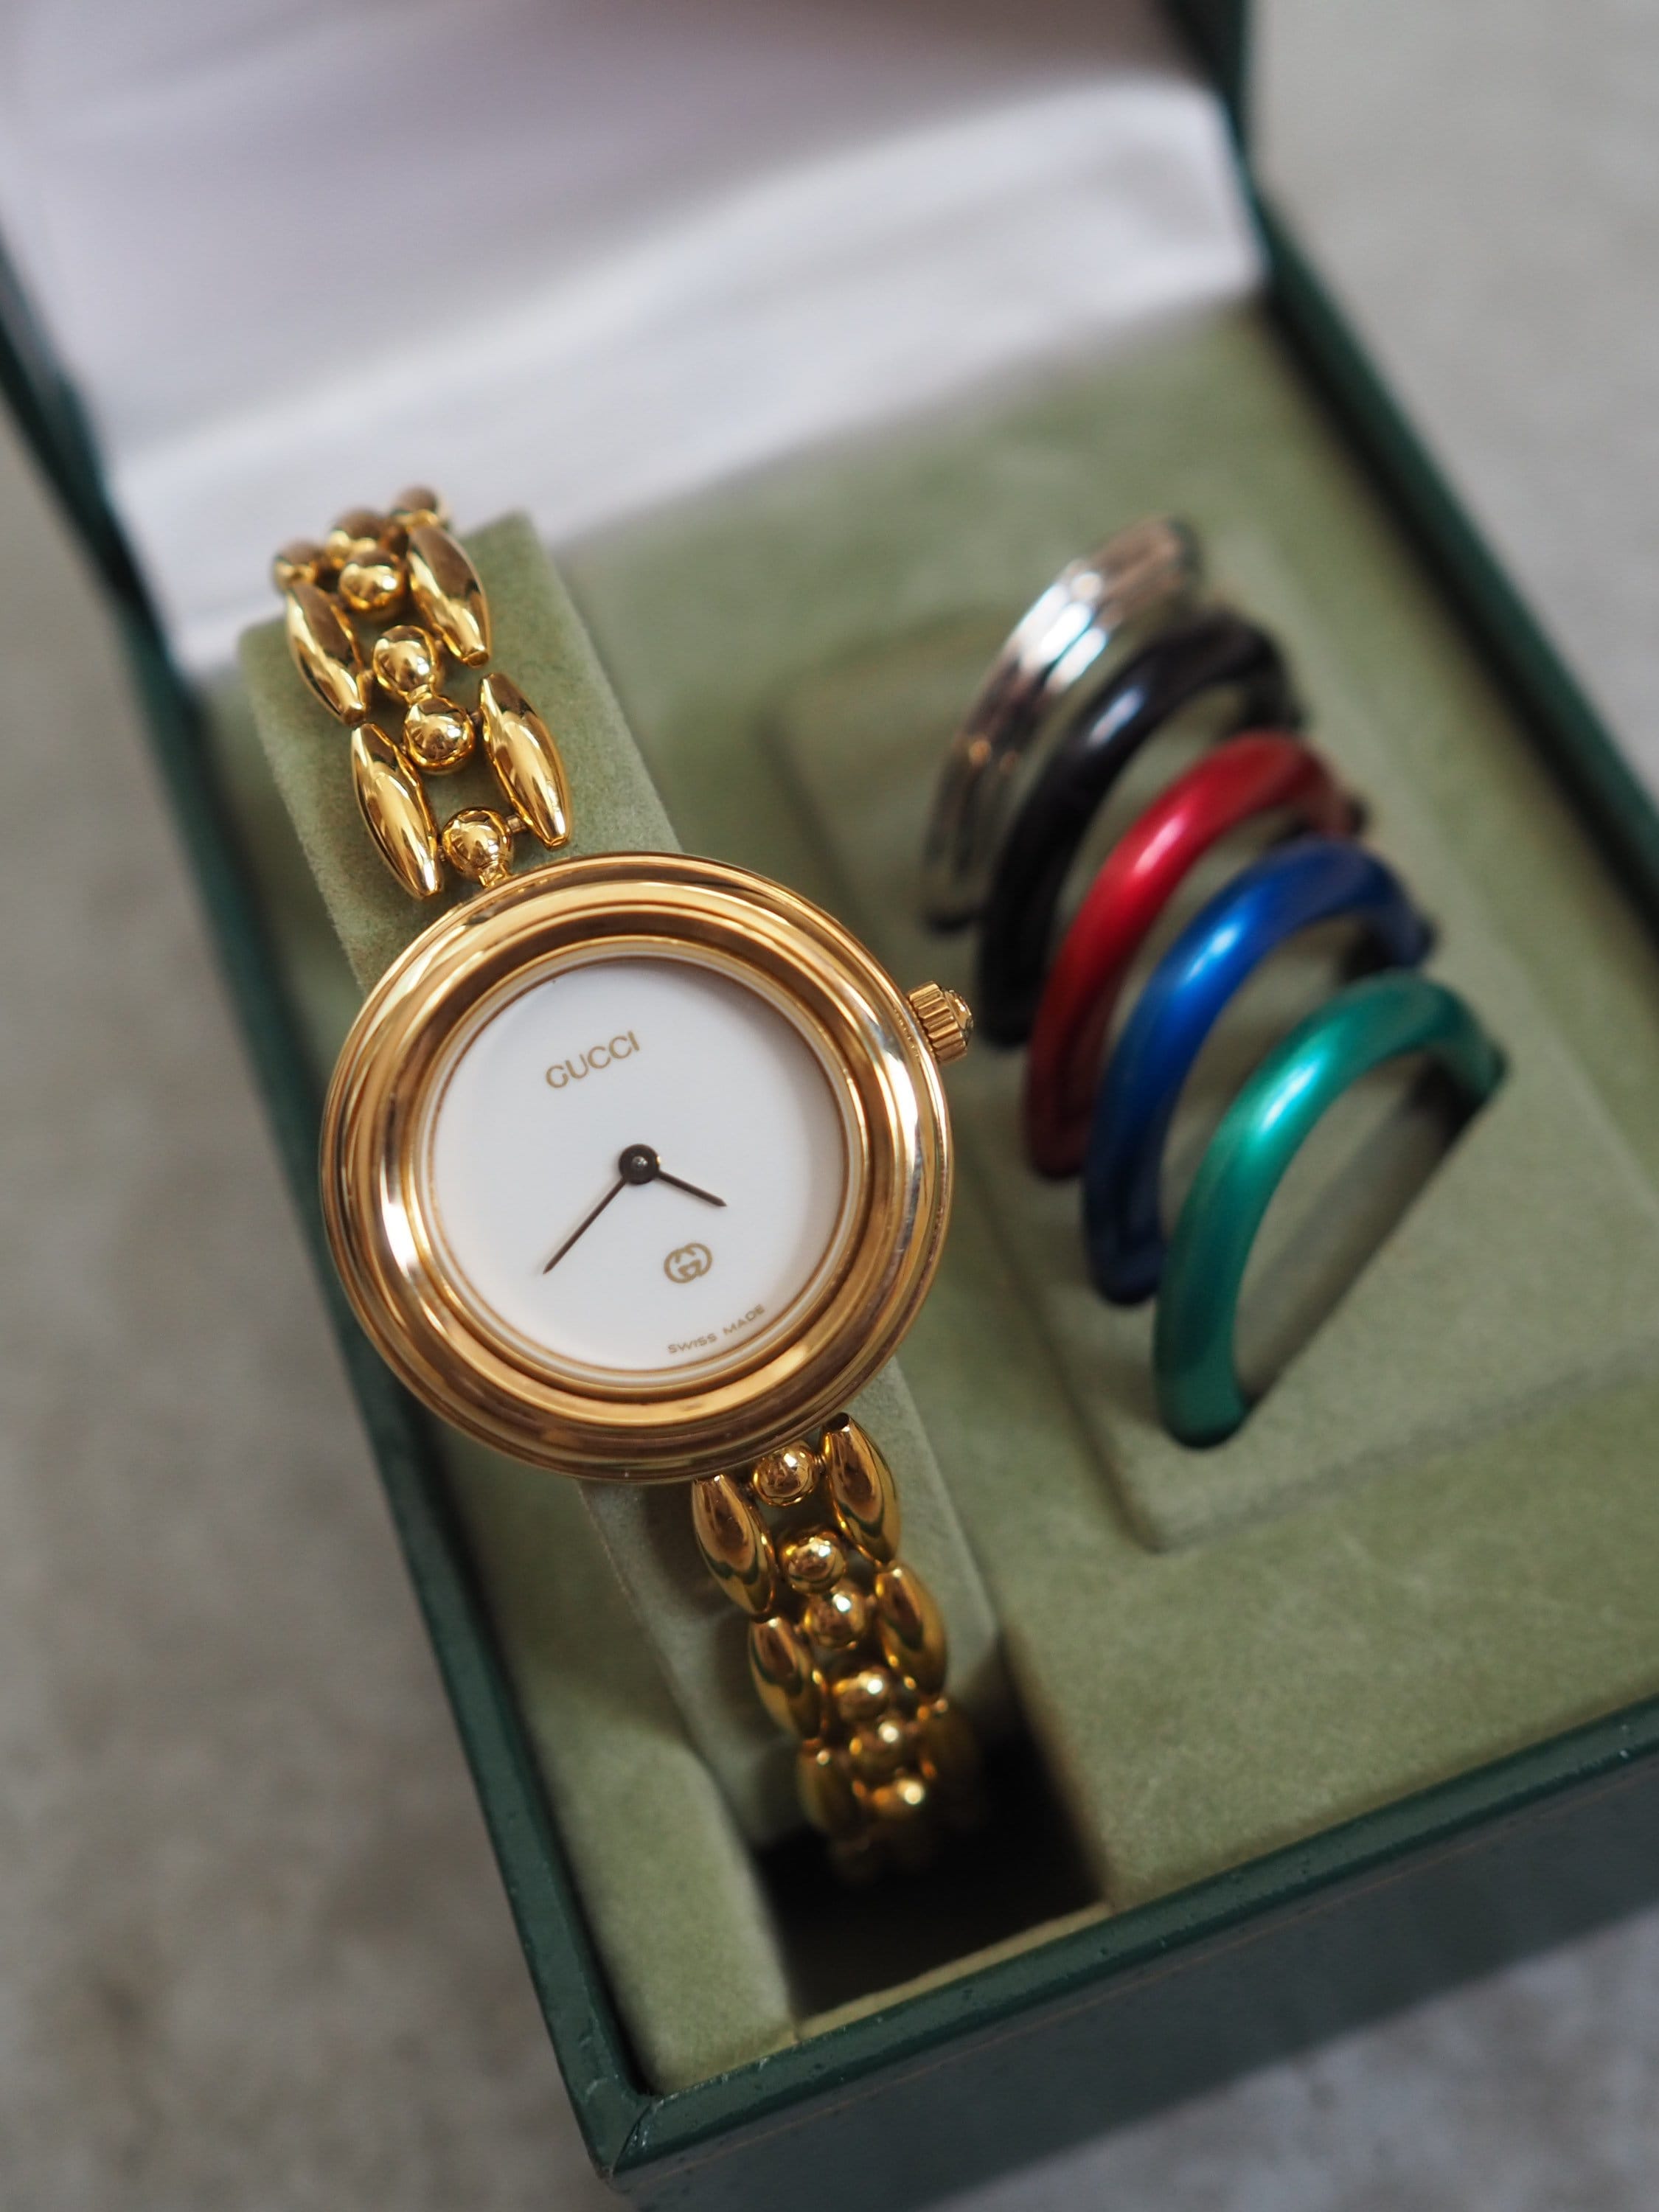 GUCCI Accessories Change Bezel 6 colors Bangle watch Wristwatch Gold